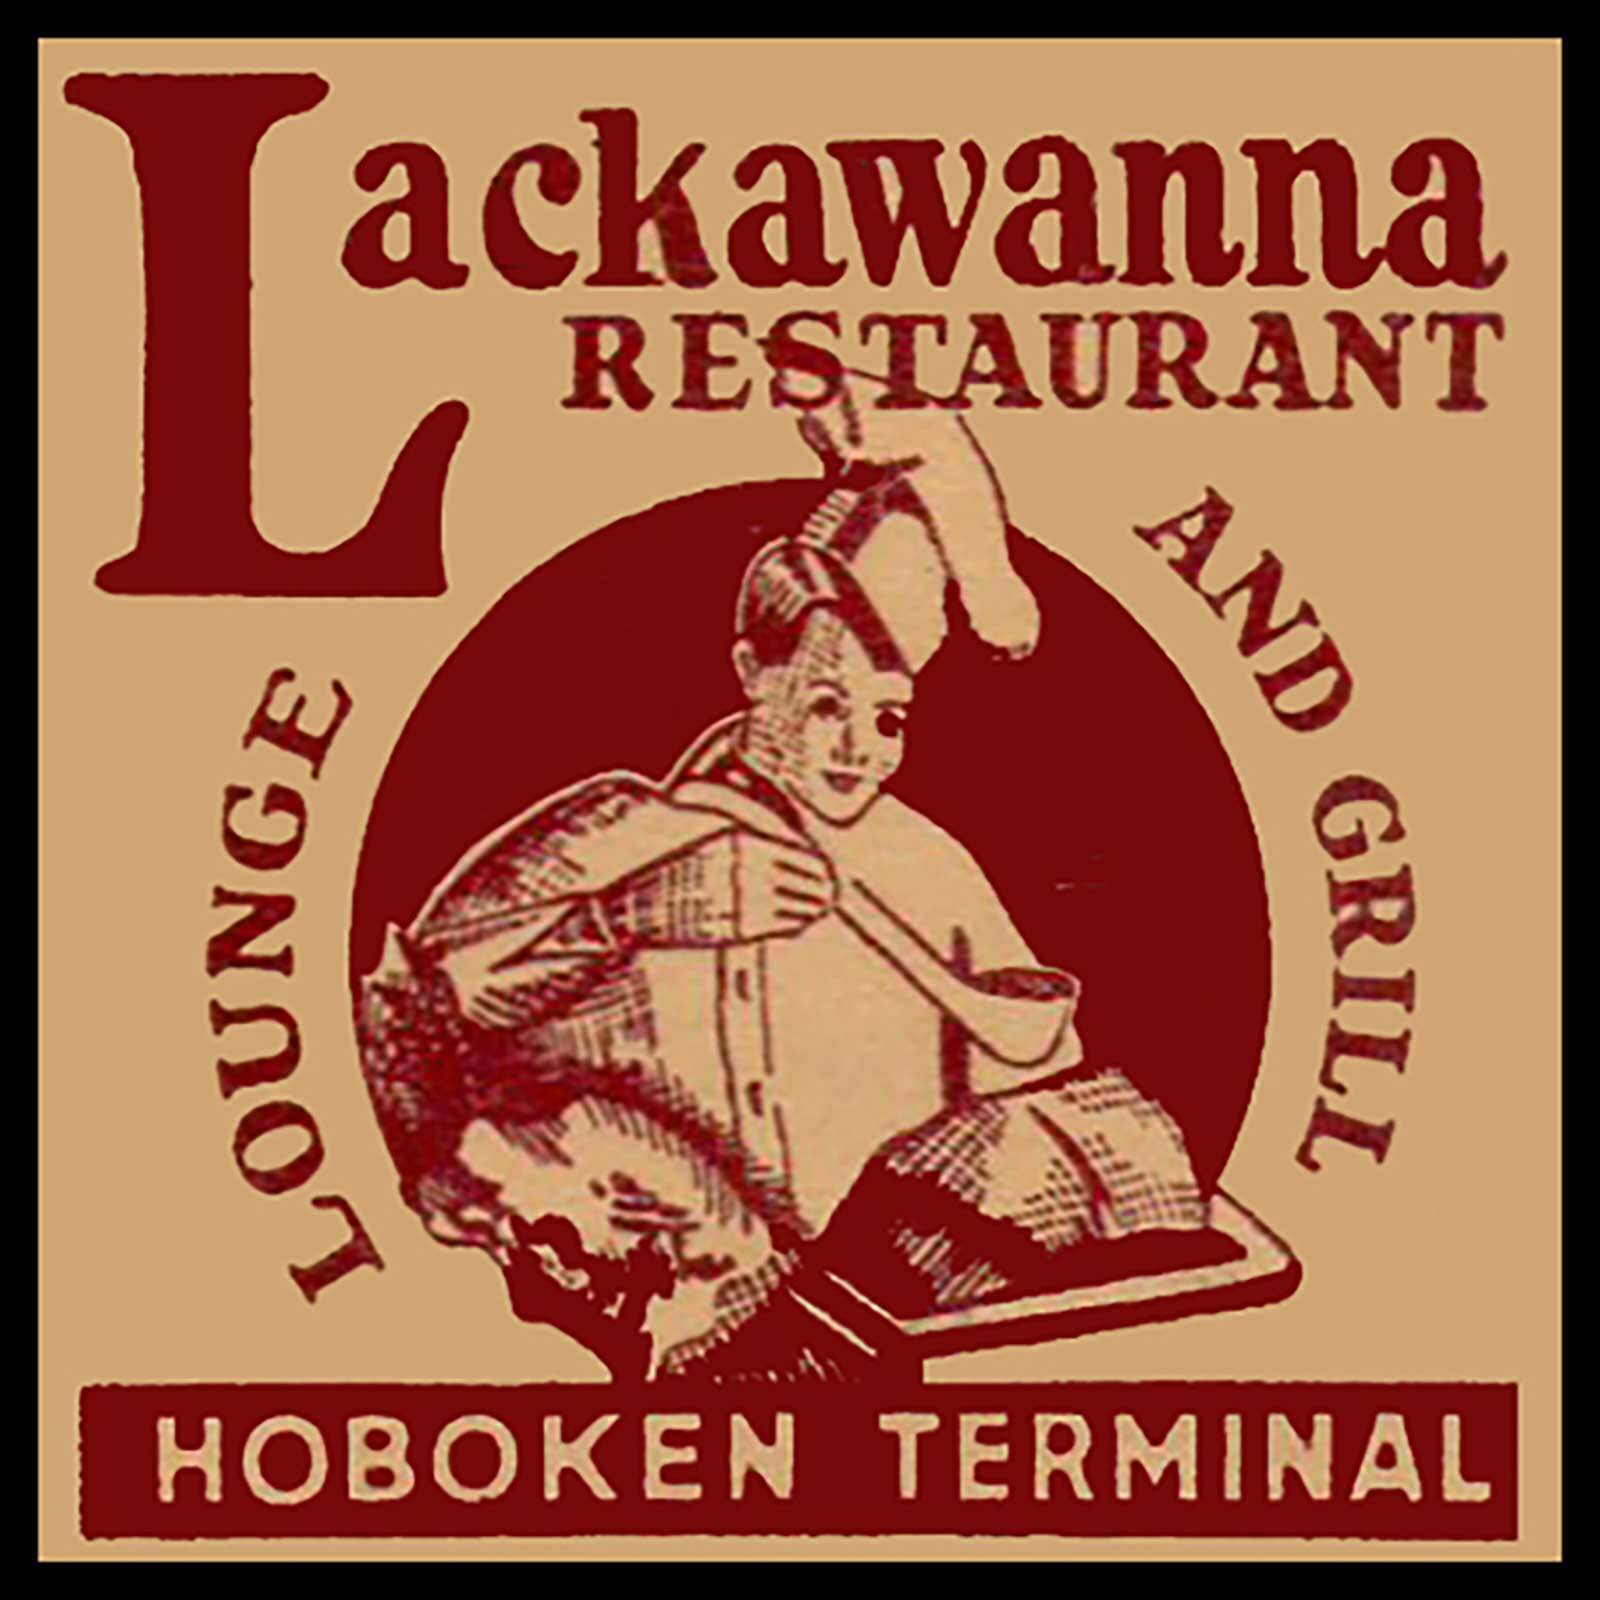 Fridge Magnet - Lackawanna Restaurant Hoboken Terminal